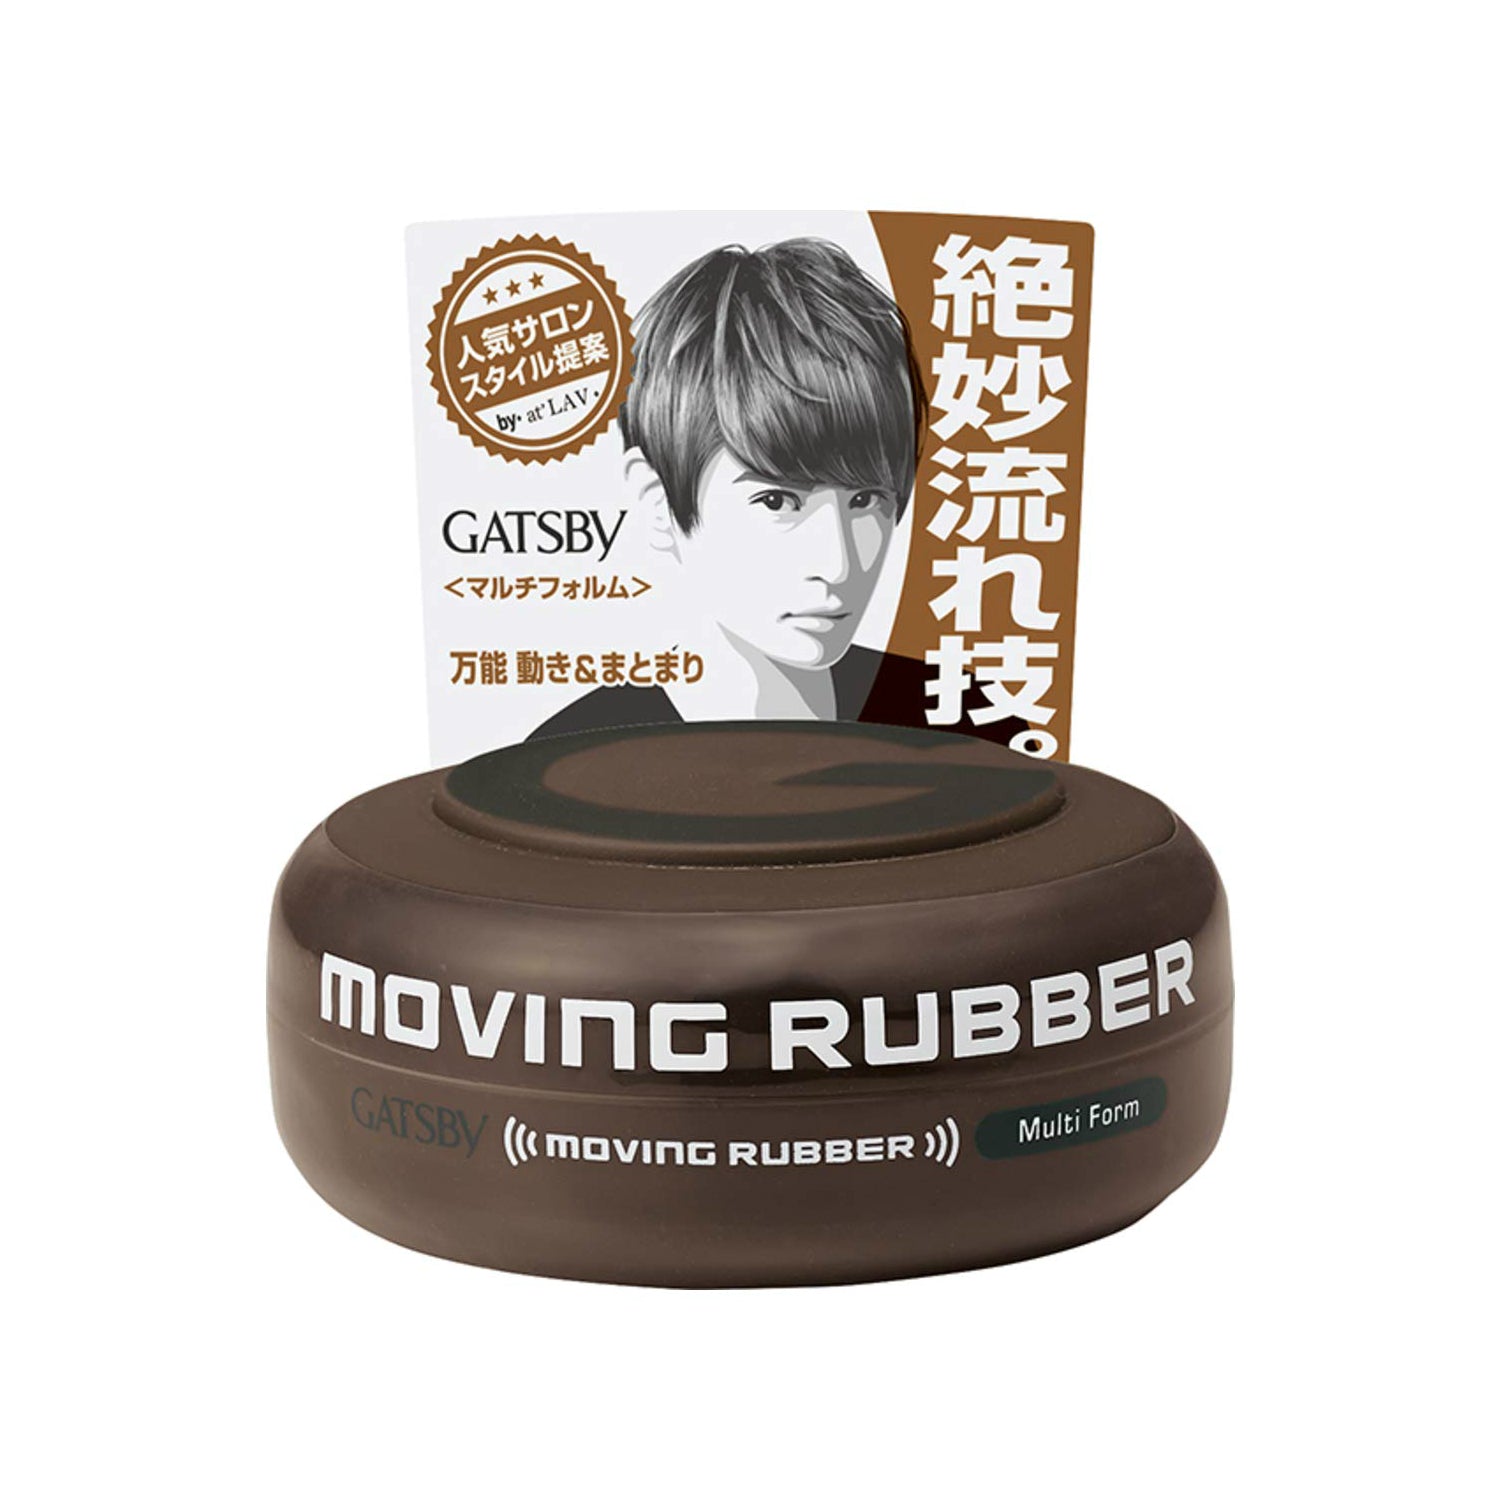 GATSBY Moving Rubber Multi Form Beauty Mandom   